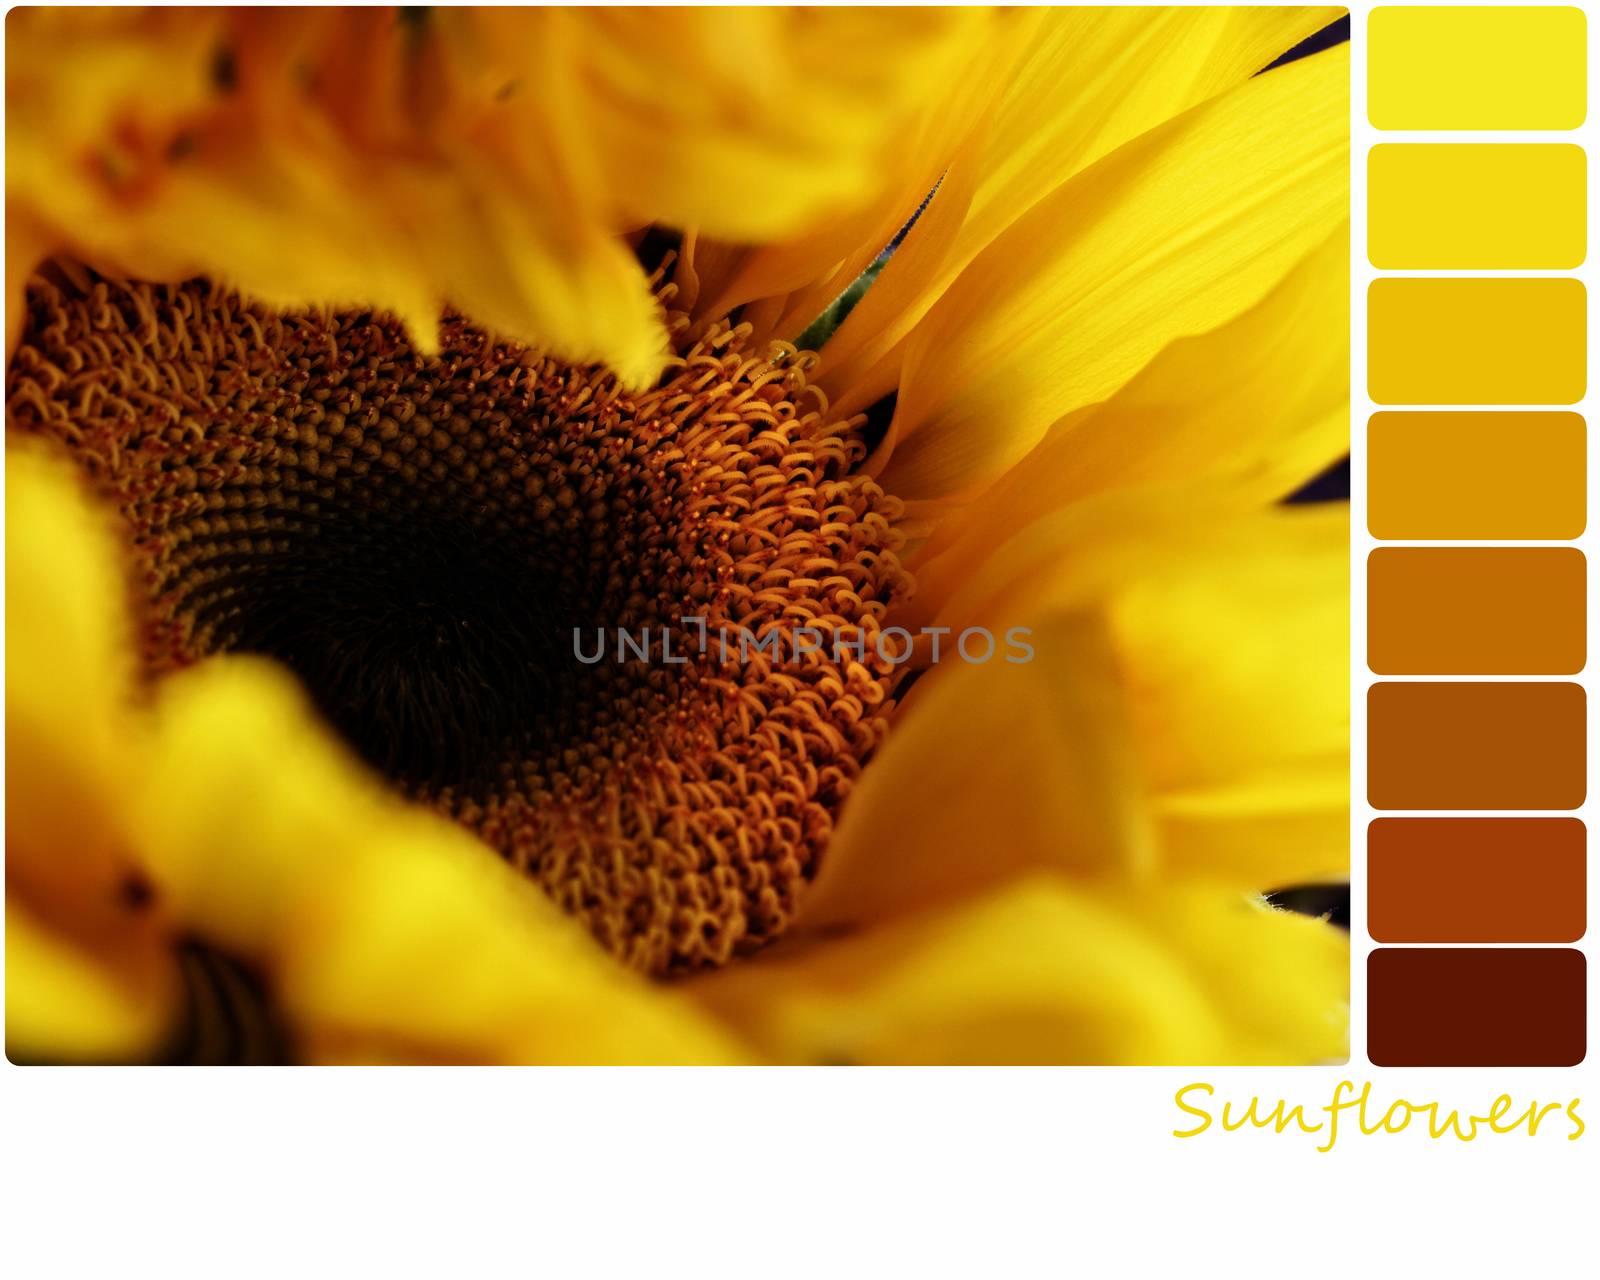 Sunflower Palette by StephanieFrey